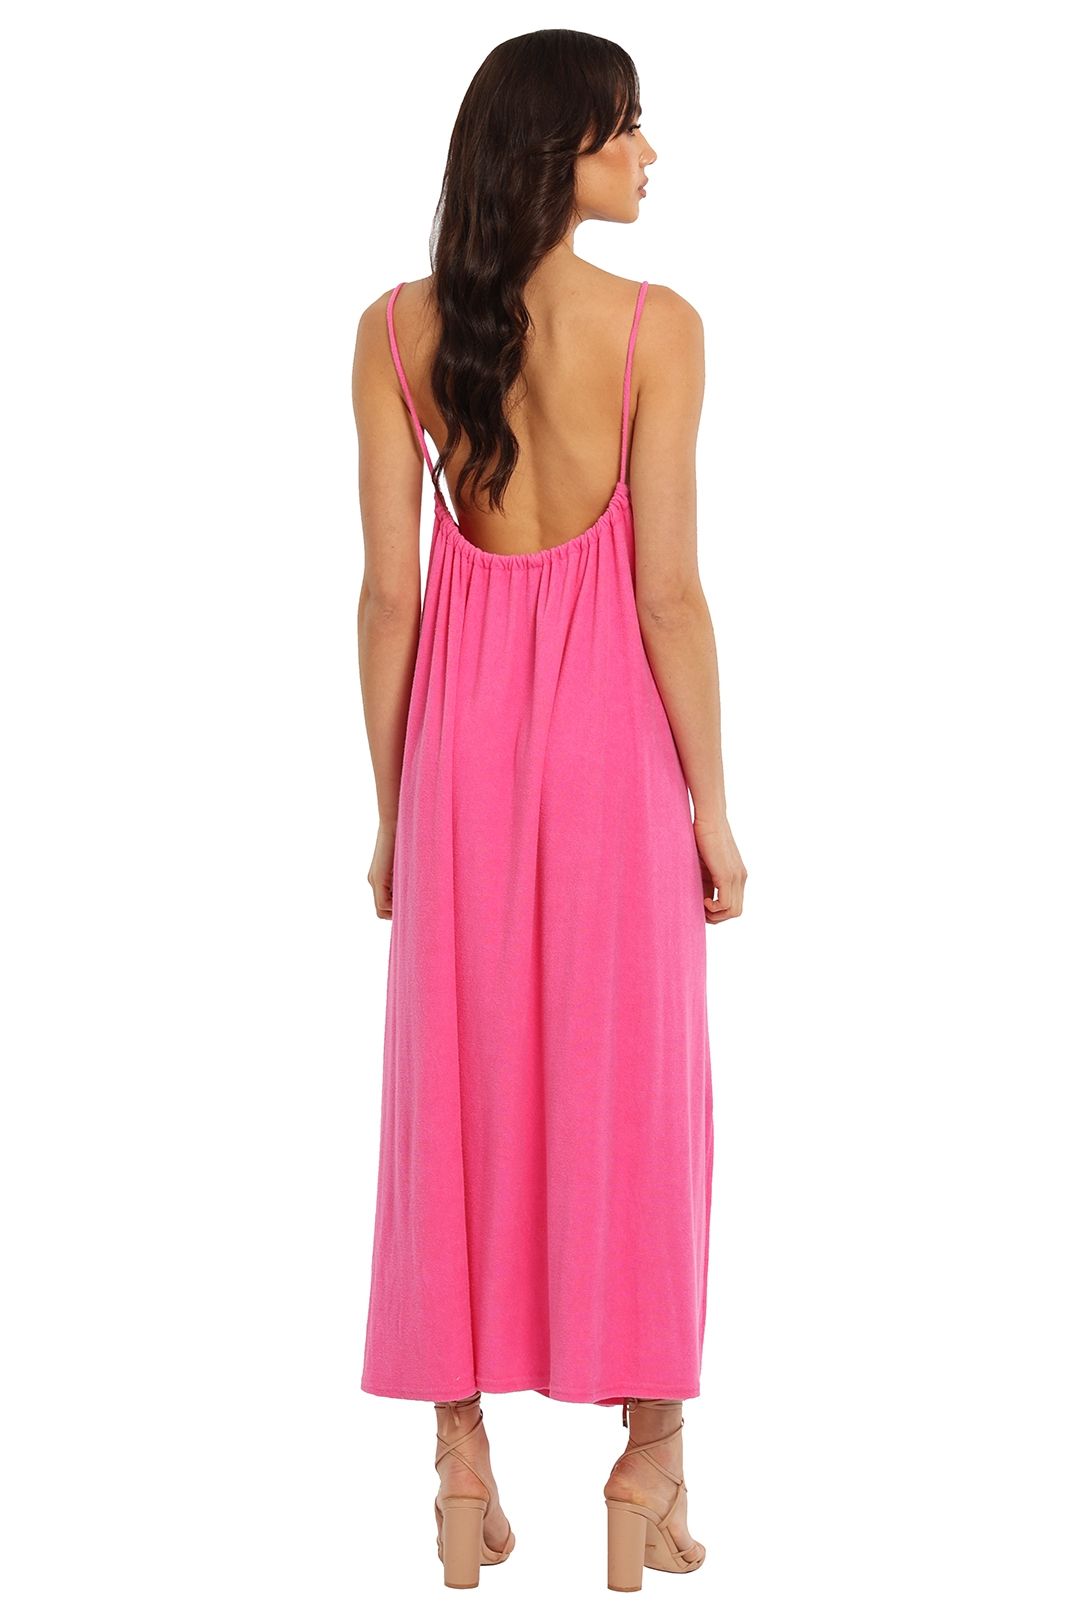 Blanca Sisco Pink Midi Dress